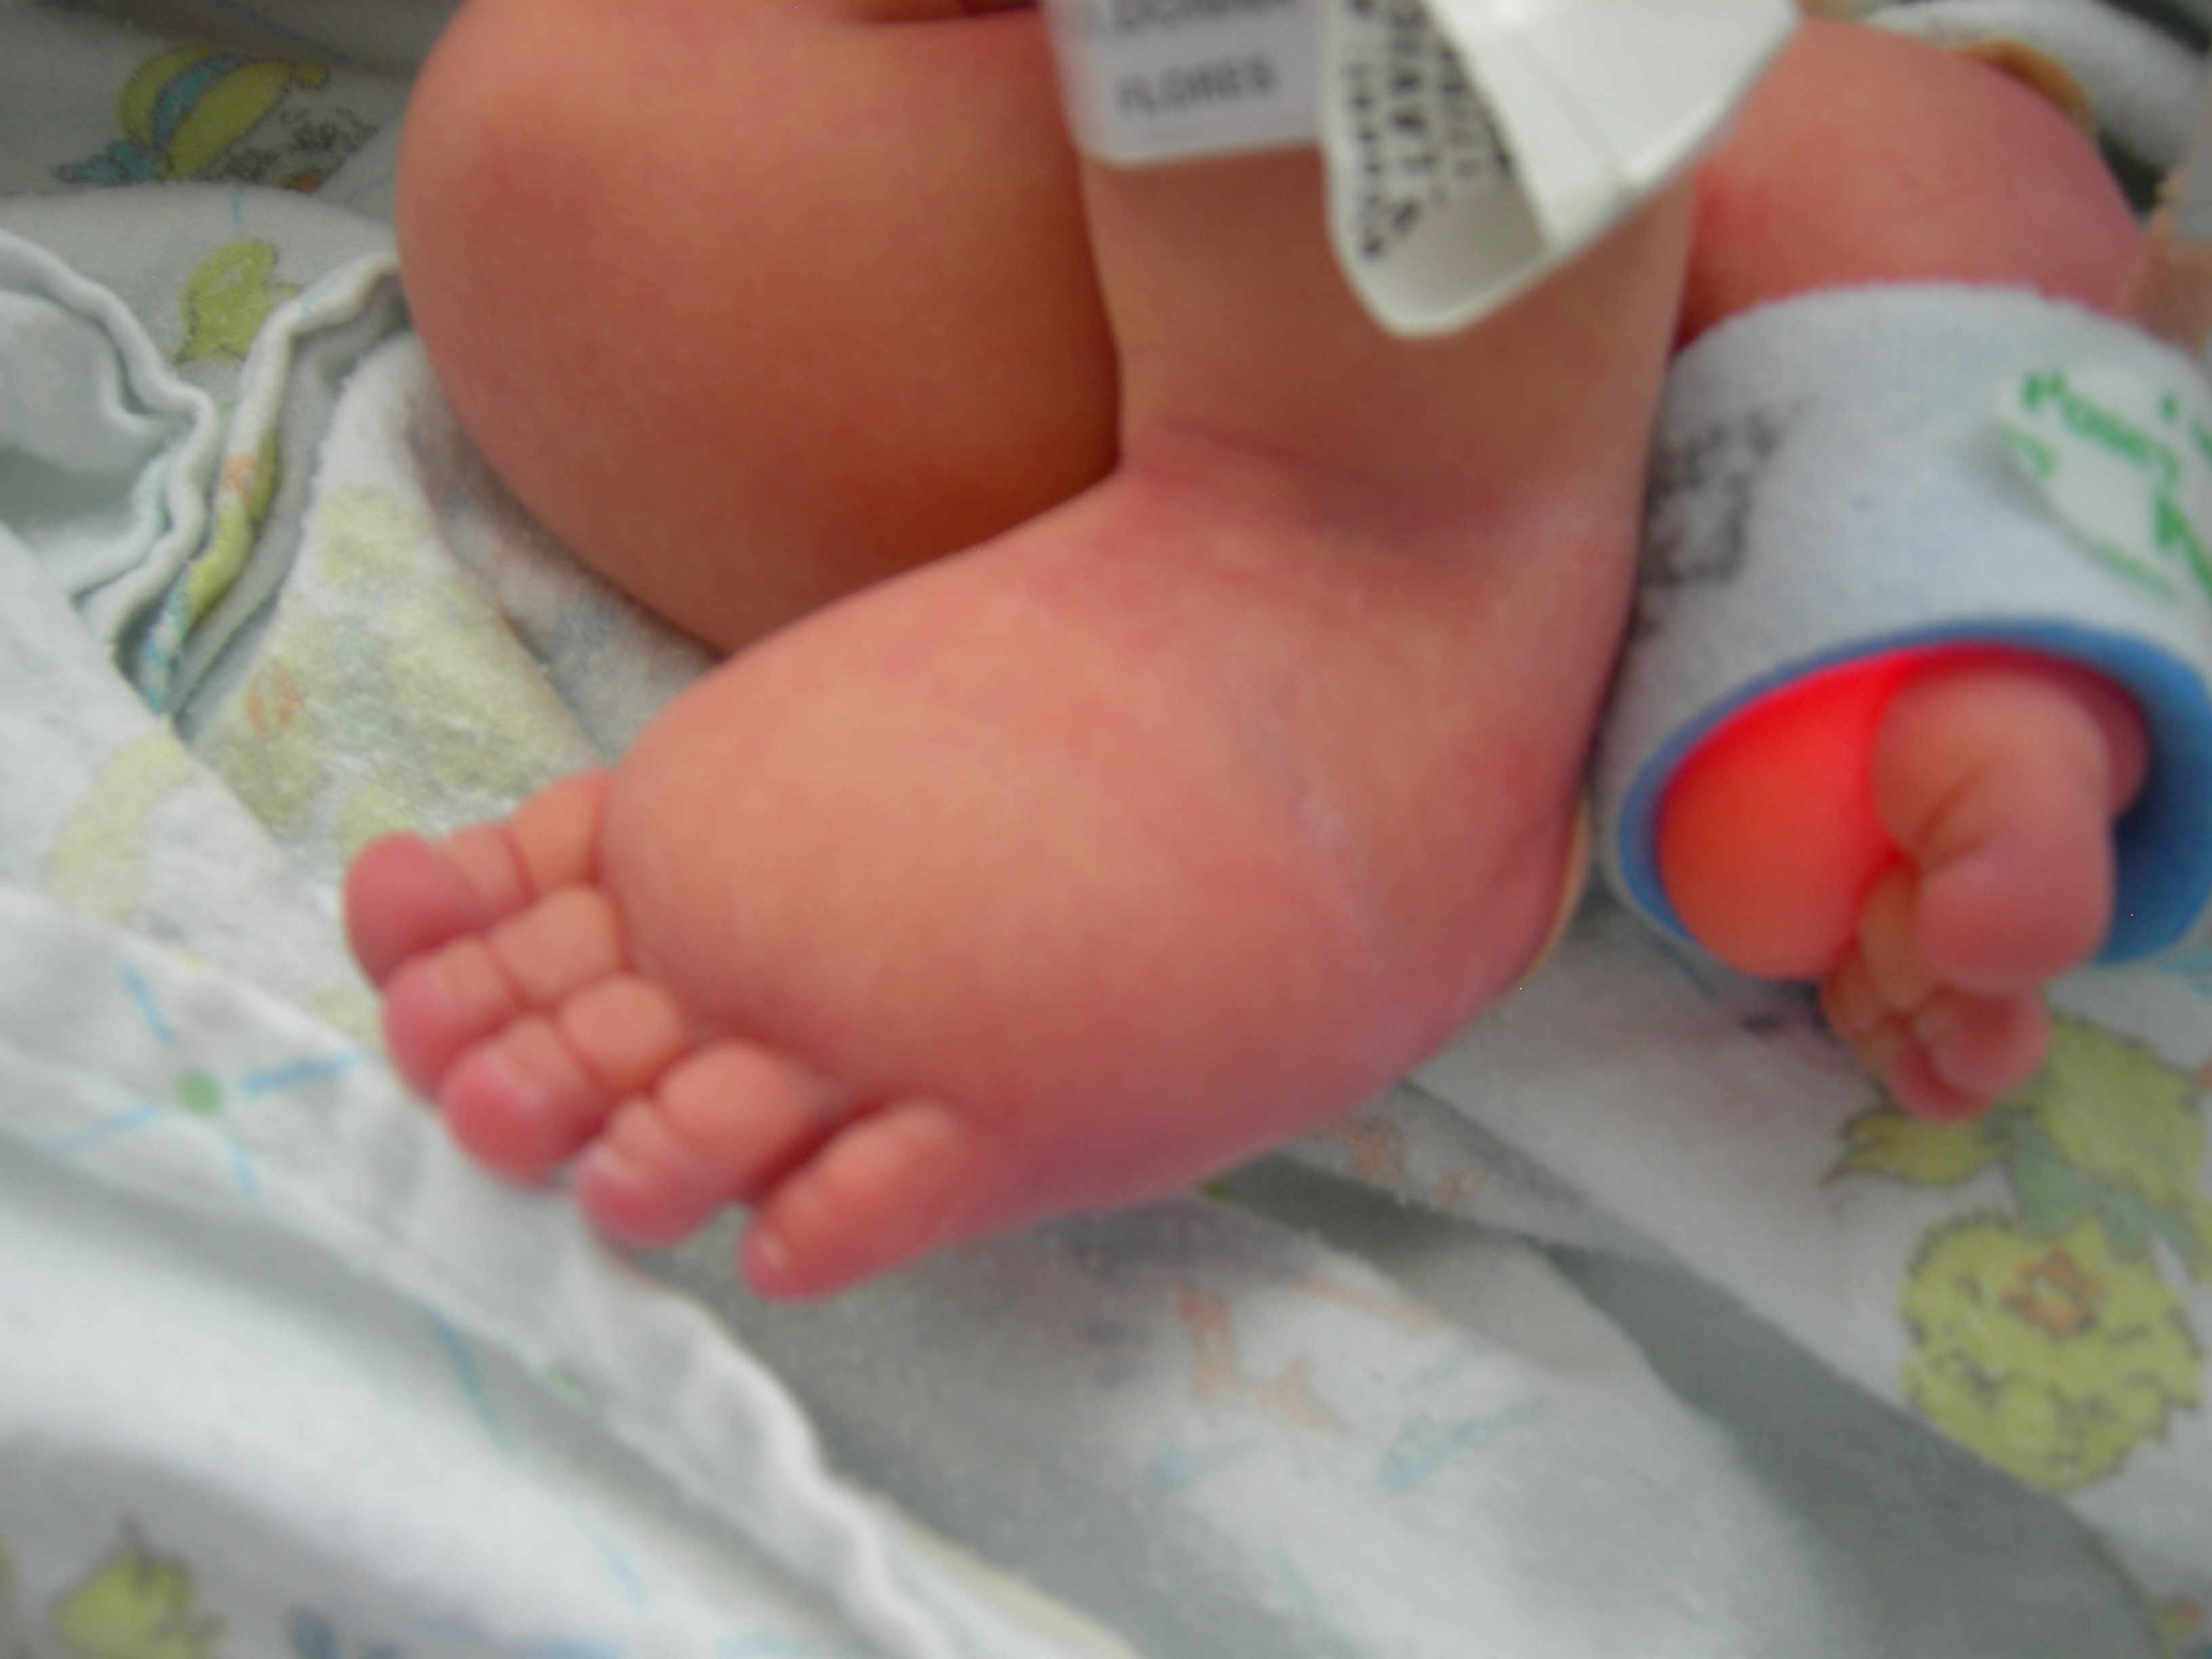 Newborn lymphedema